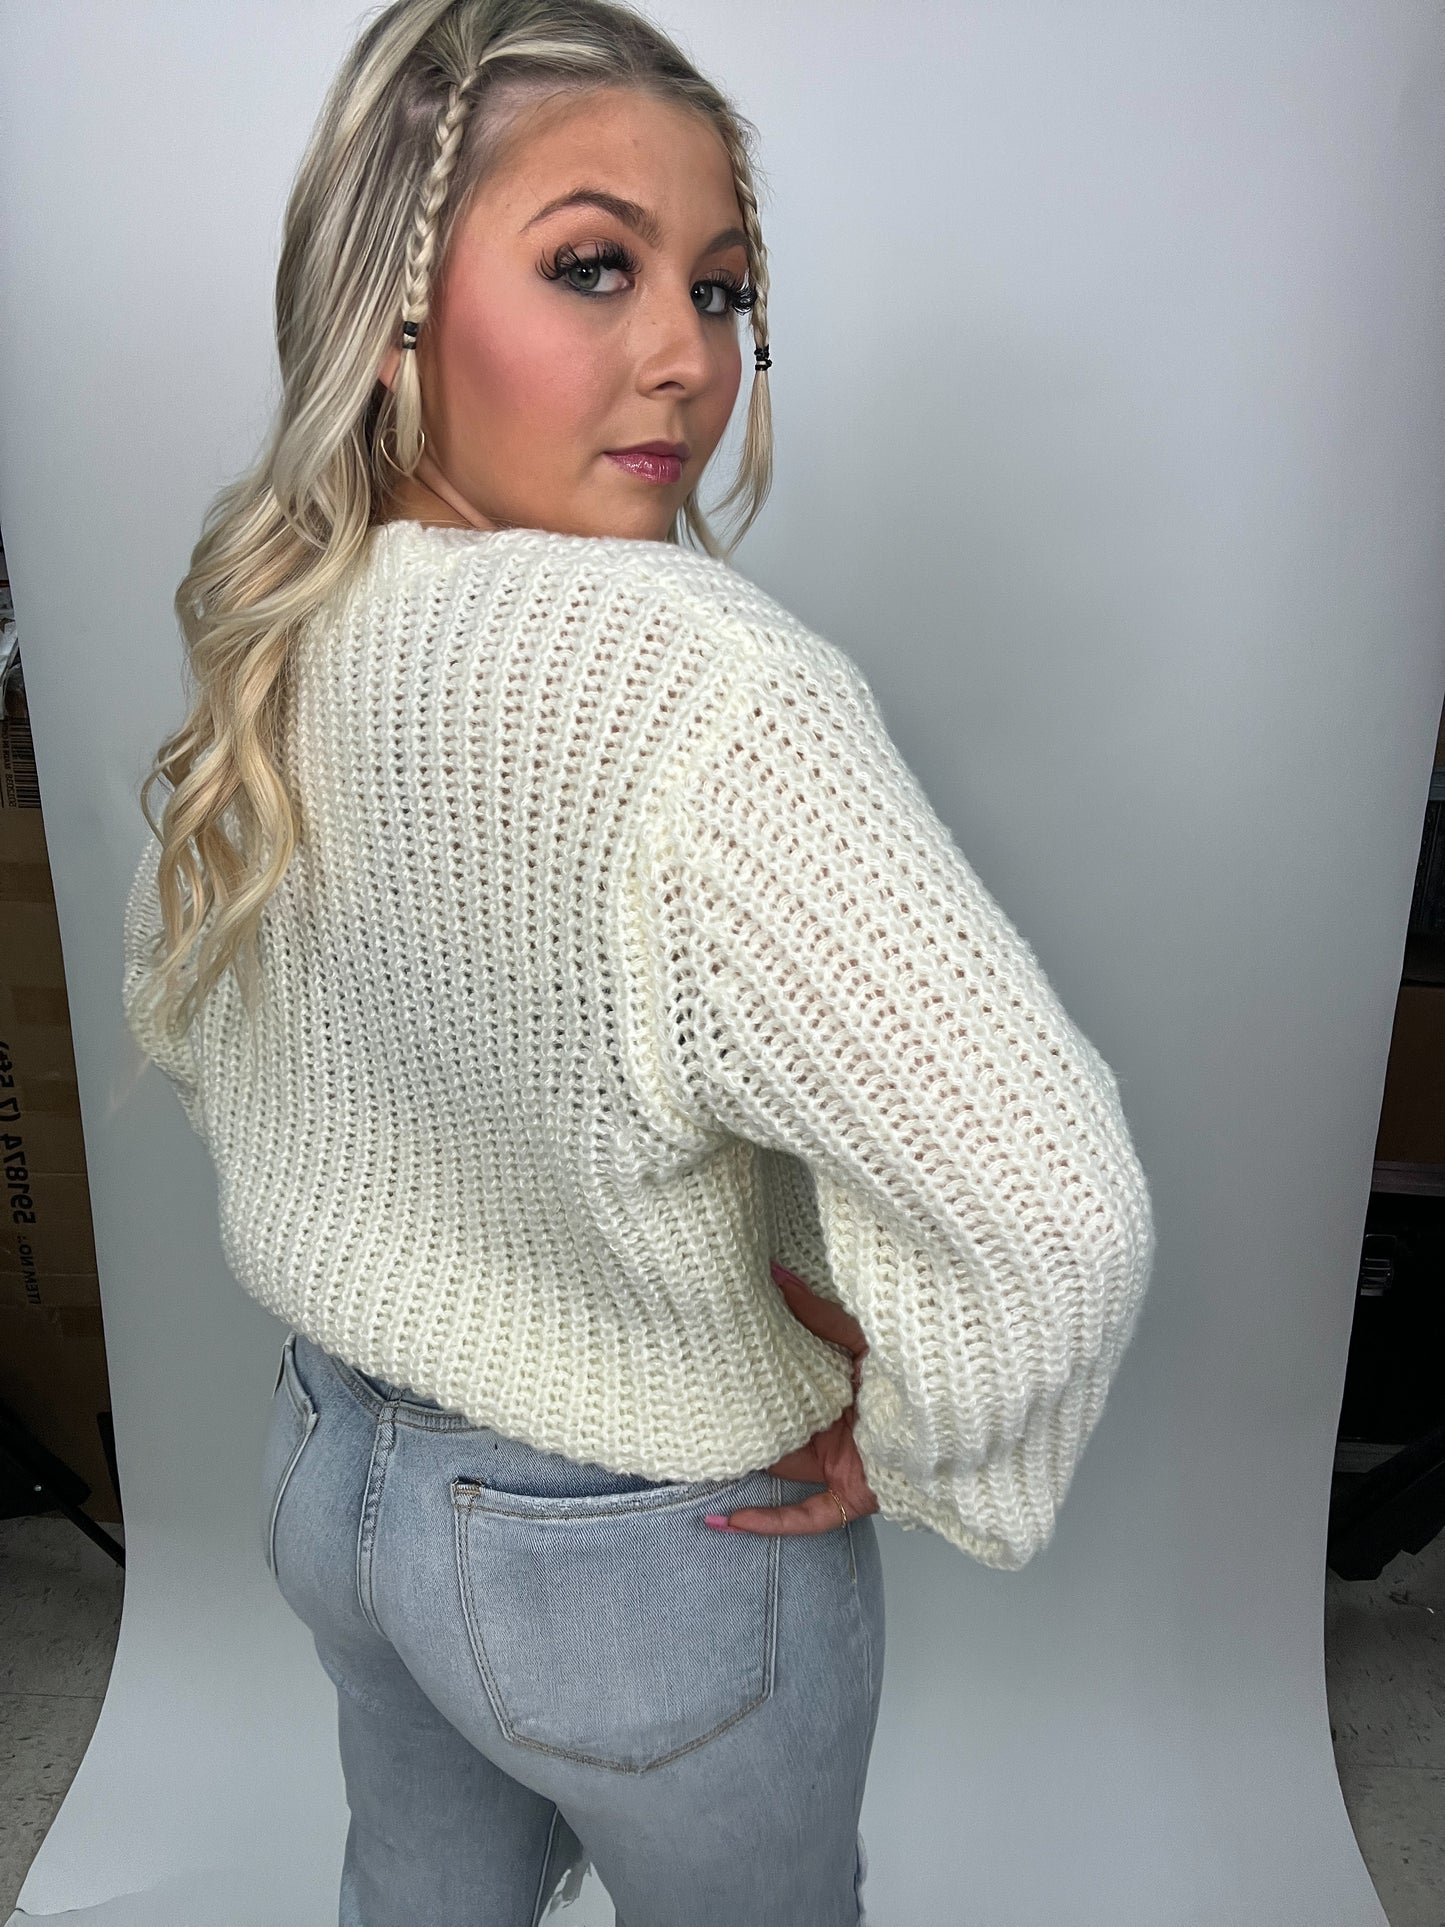 Belle White Sweater